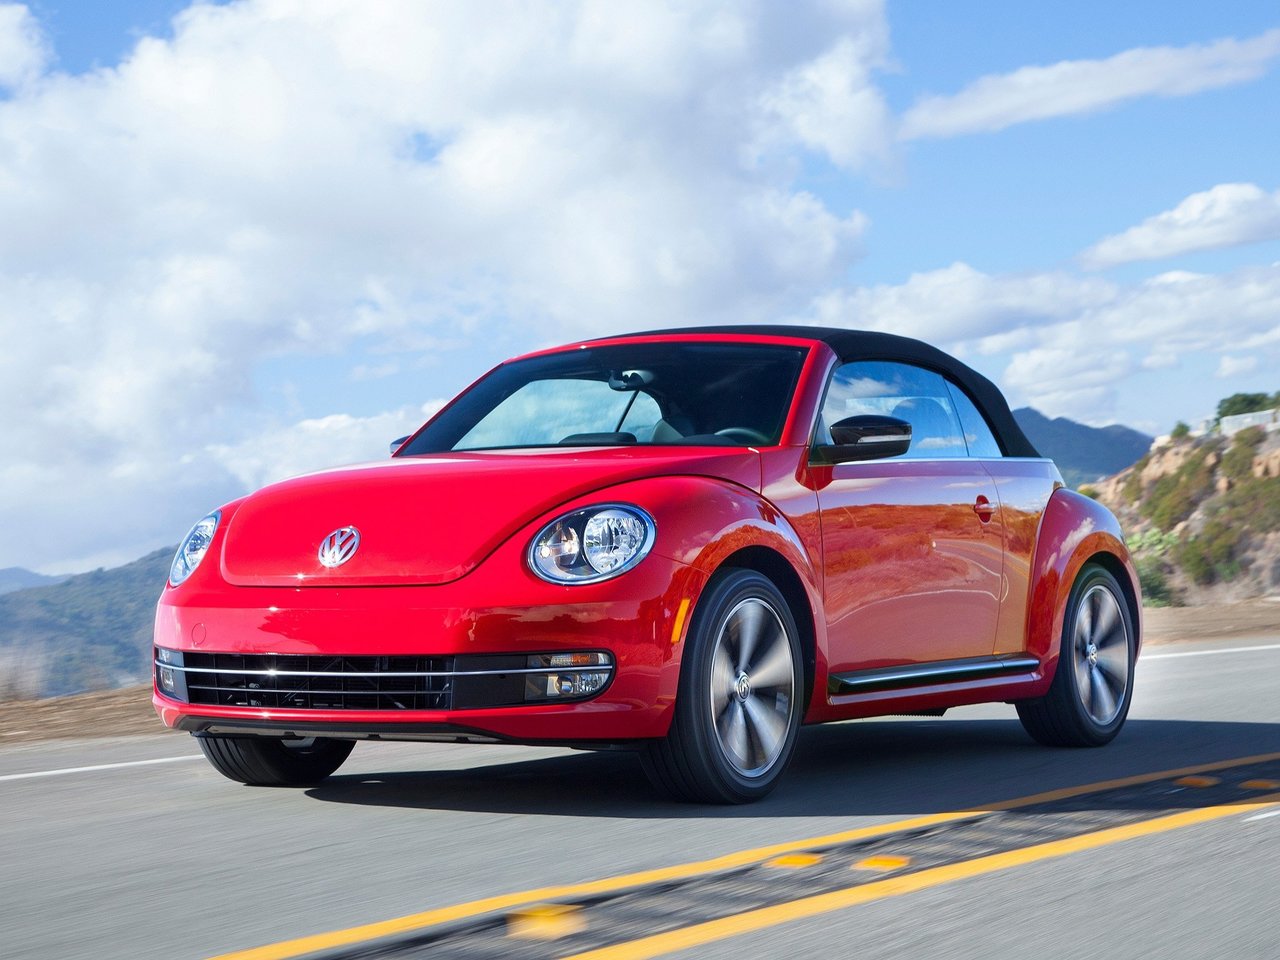 Расход газа десяти комплектаций кабриолета Volkswagen Beetle. Разница стоимости заправки газом и бензином. Автономный пробег до и после установки ГБО.